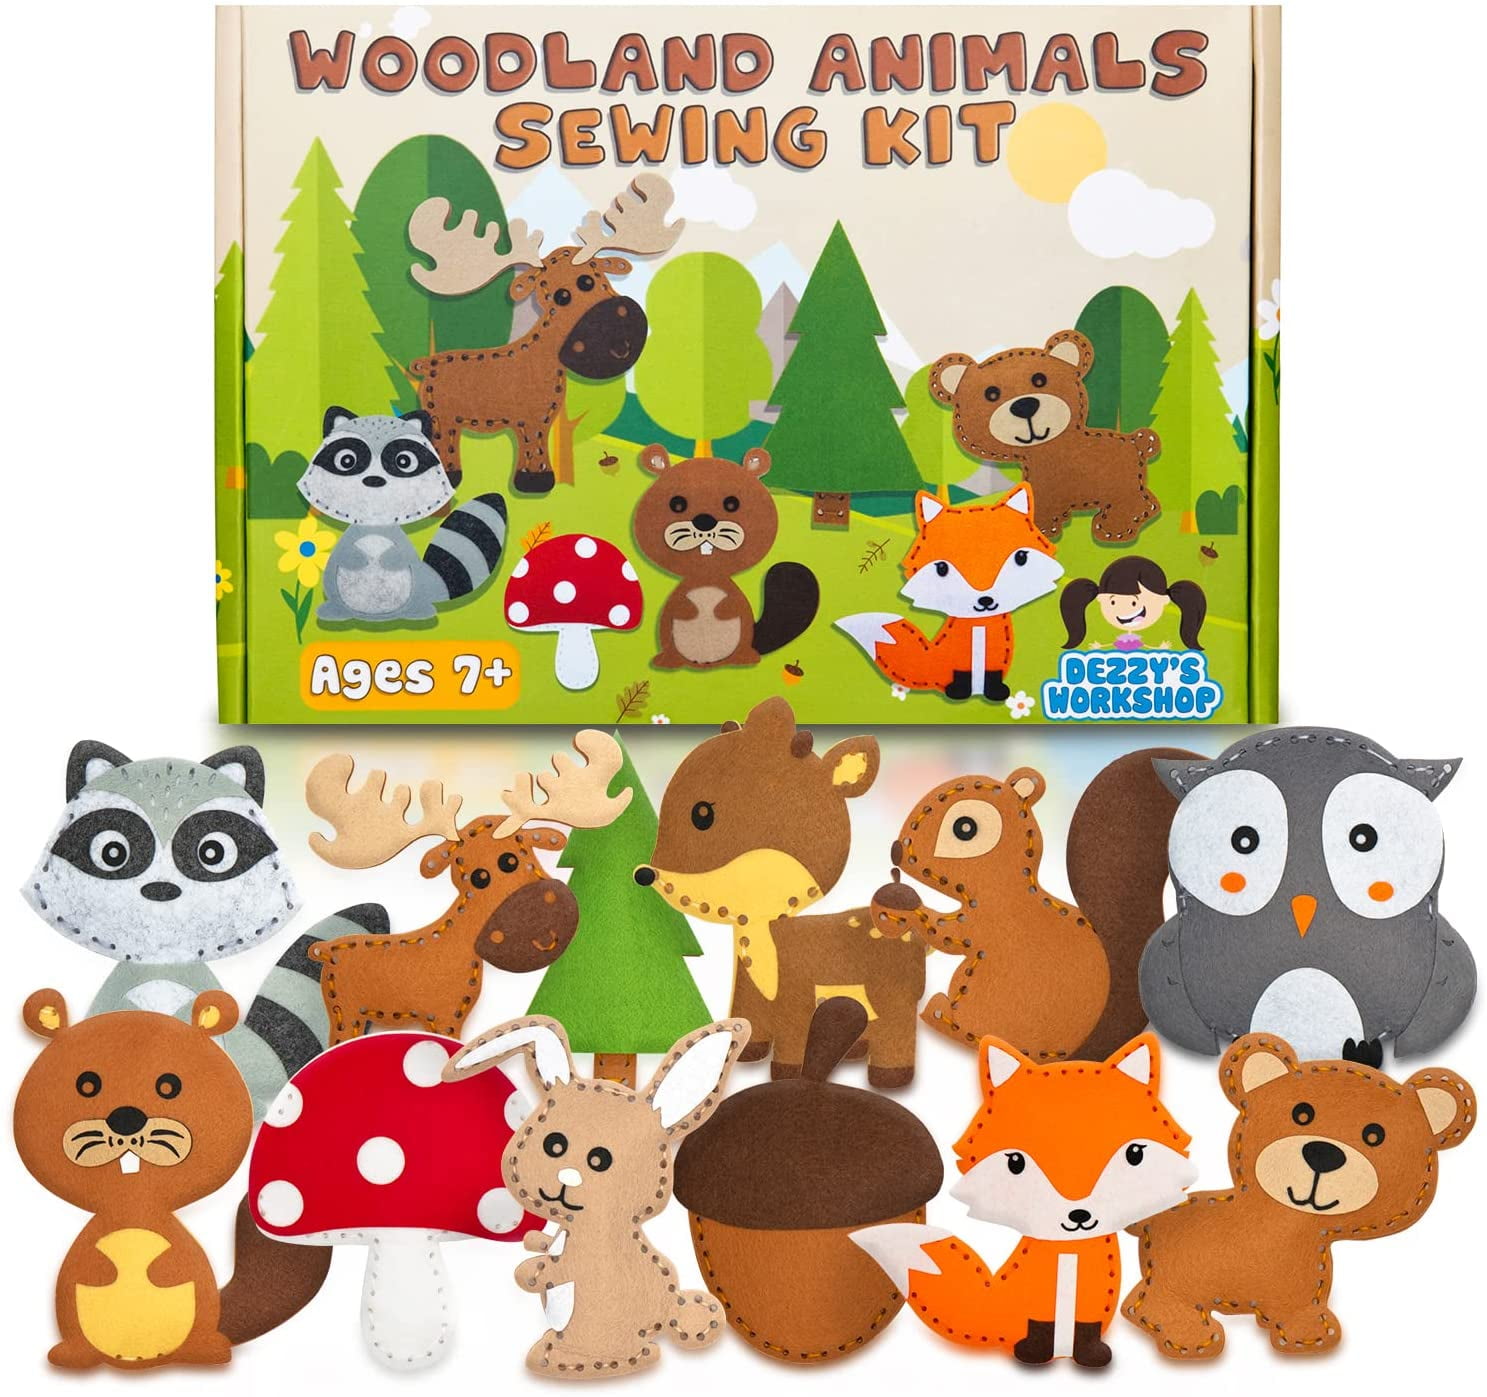 Dezzy's Workshop Sewing Kit for Kids - Woodland Animals Kids